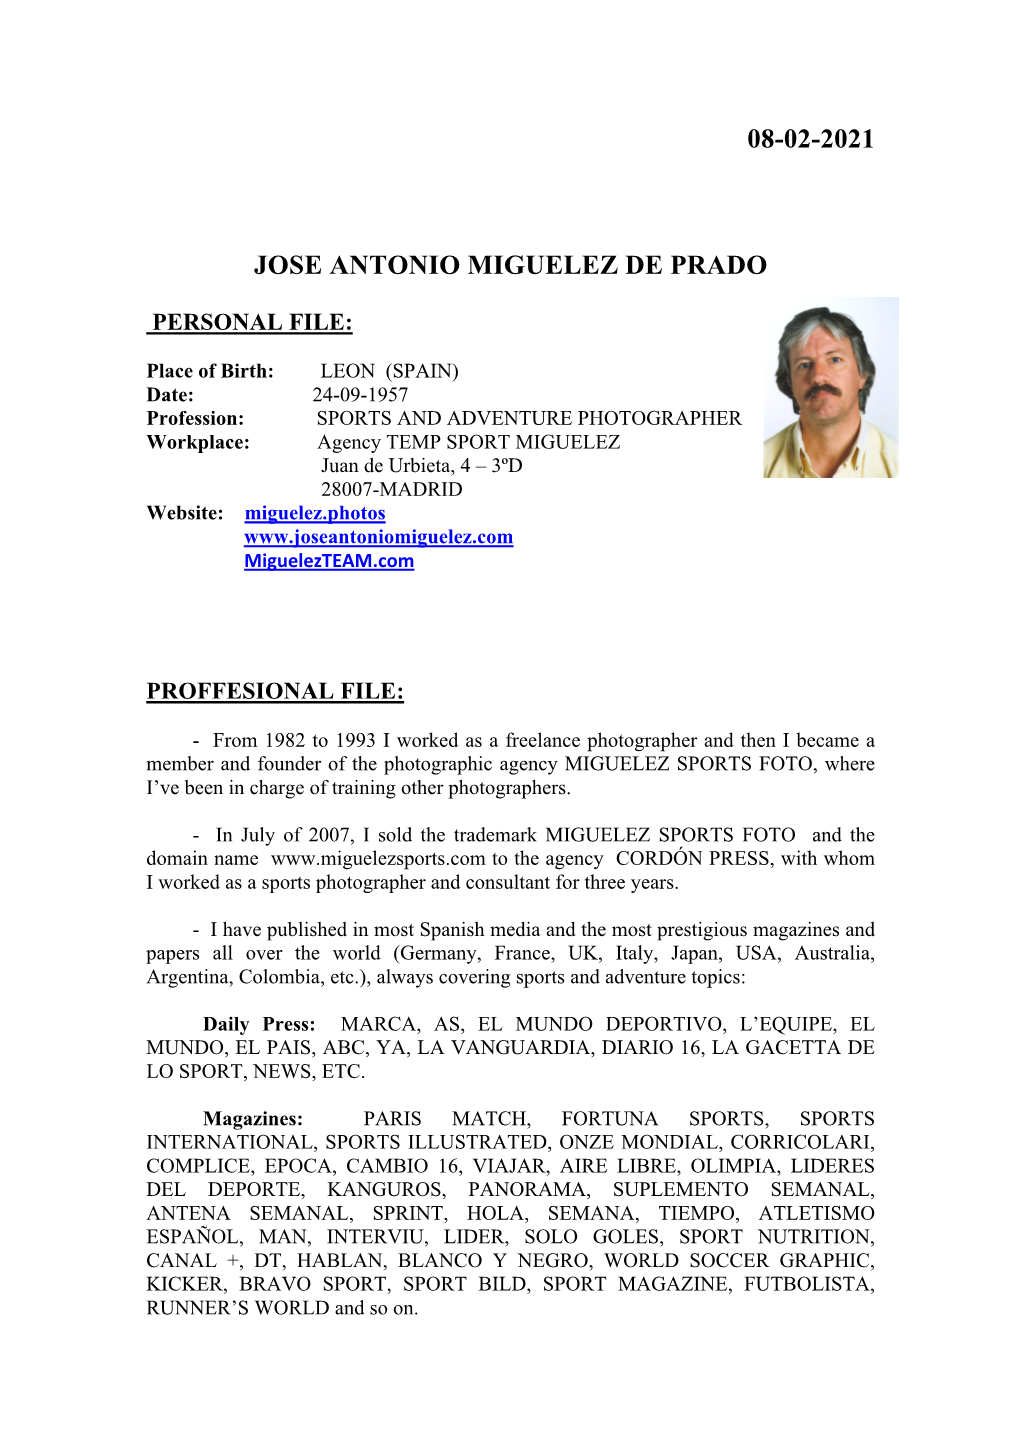 08-02-2021 Jose Antonio Miguelez De Prado